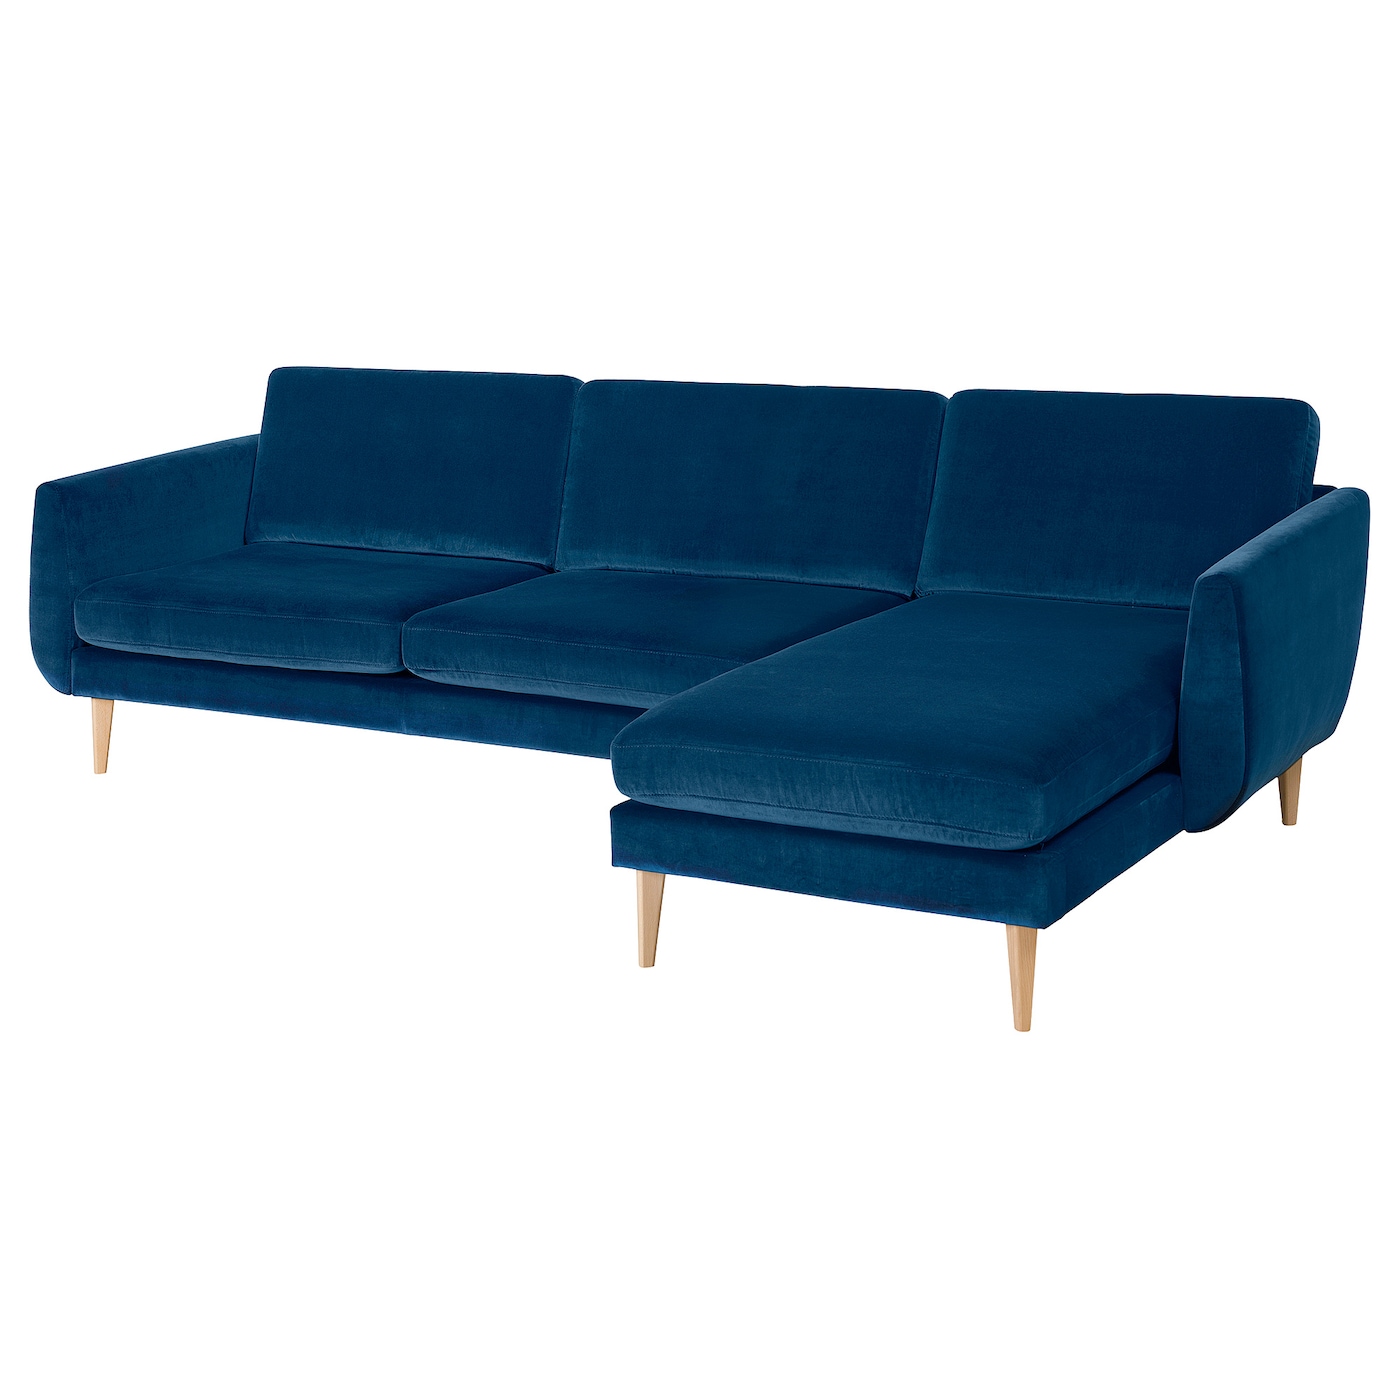 цена СМЕДСТОРП 4-местный диван + диван, Дюпарп/темно-зелено-синий дуб SMEDSTORP IKEA